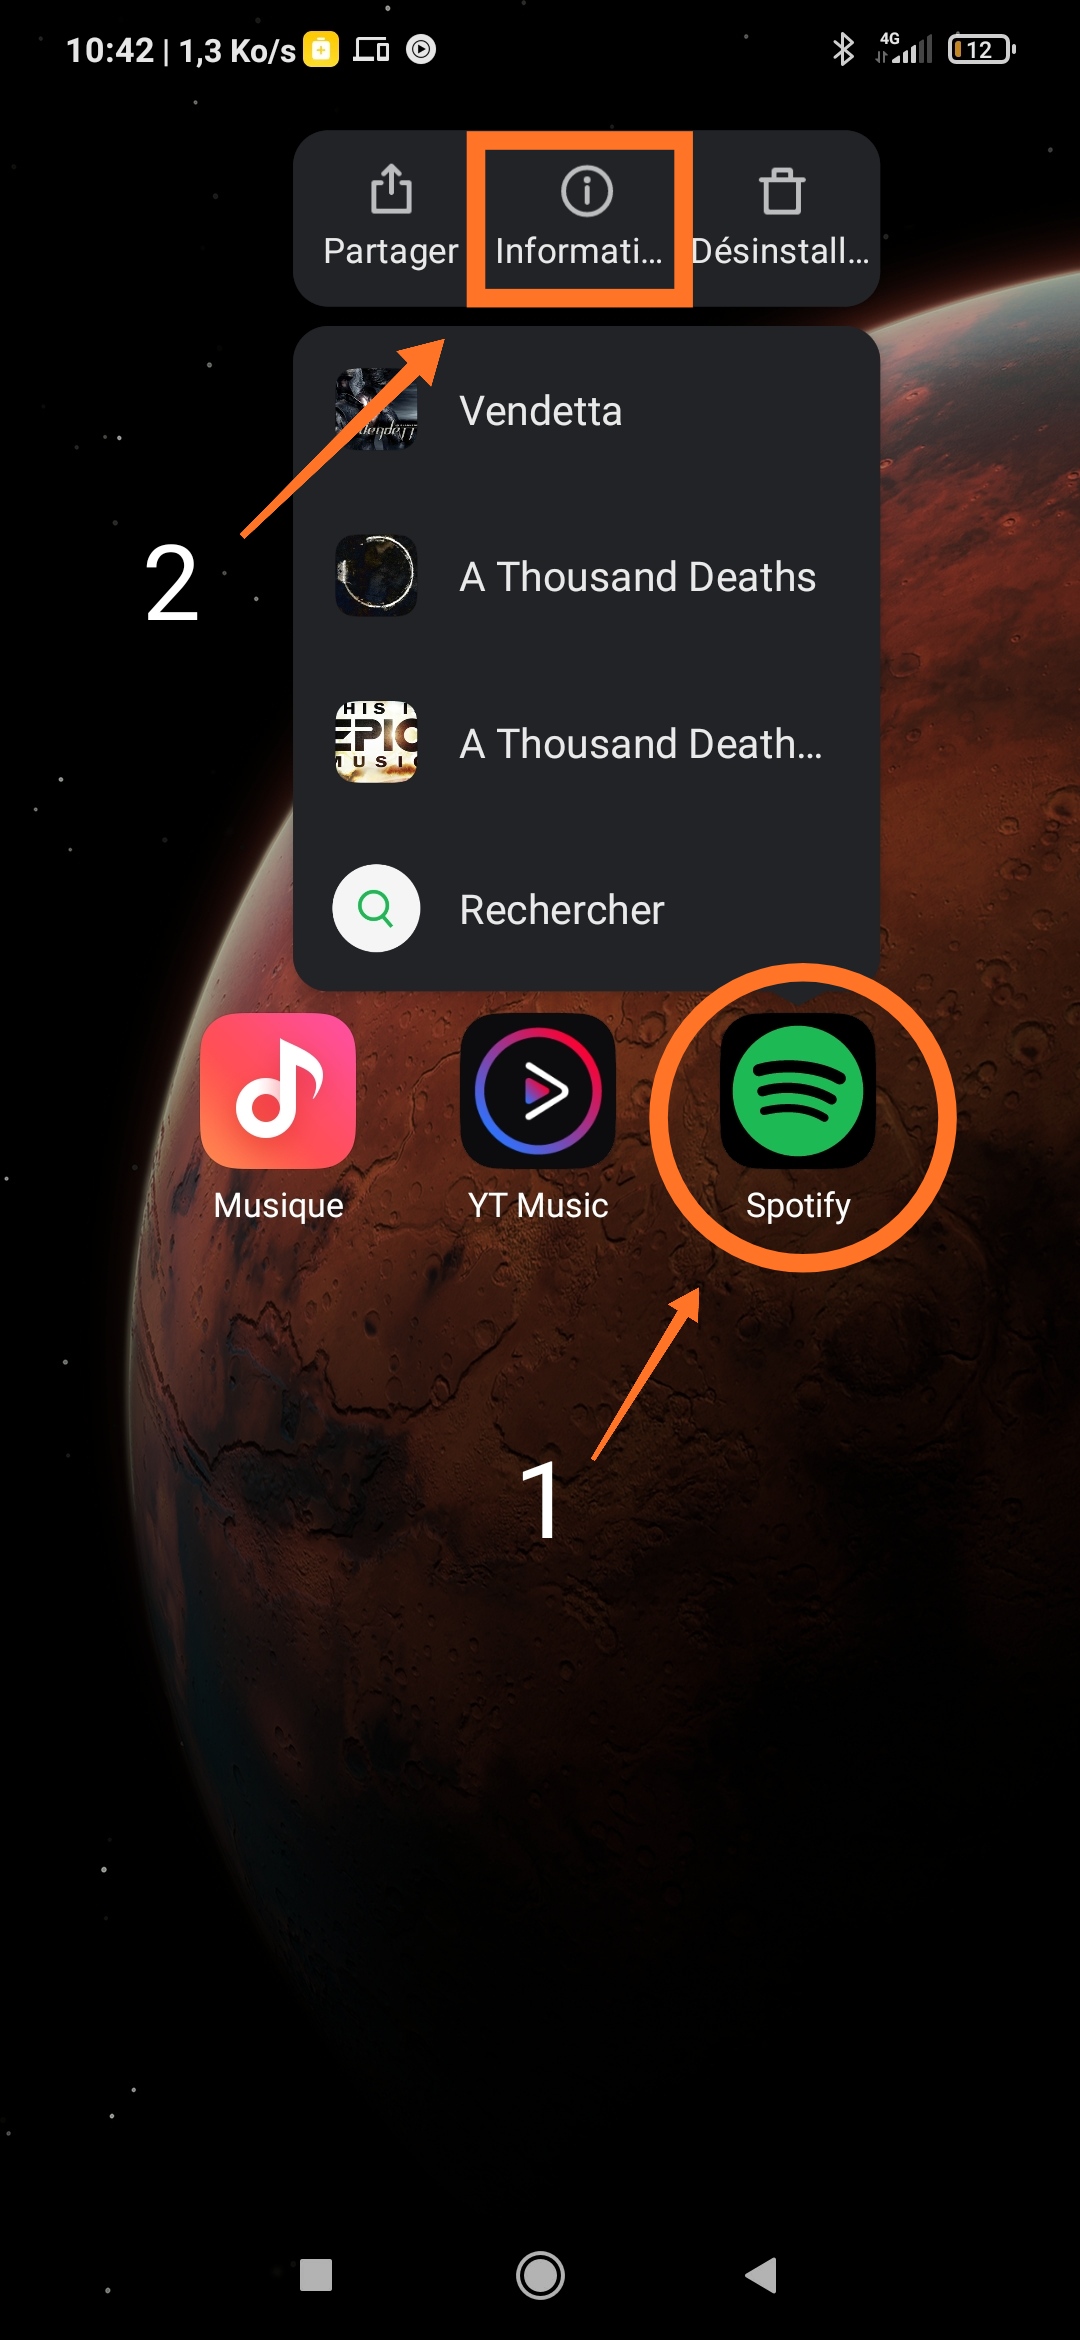 Spotify app icon and a menu.